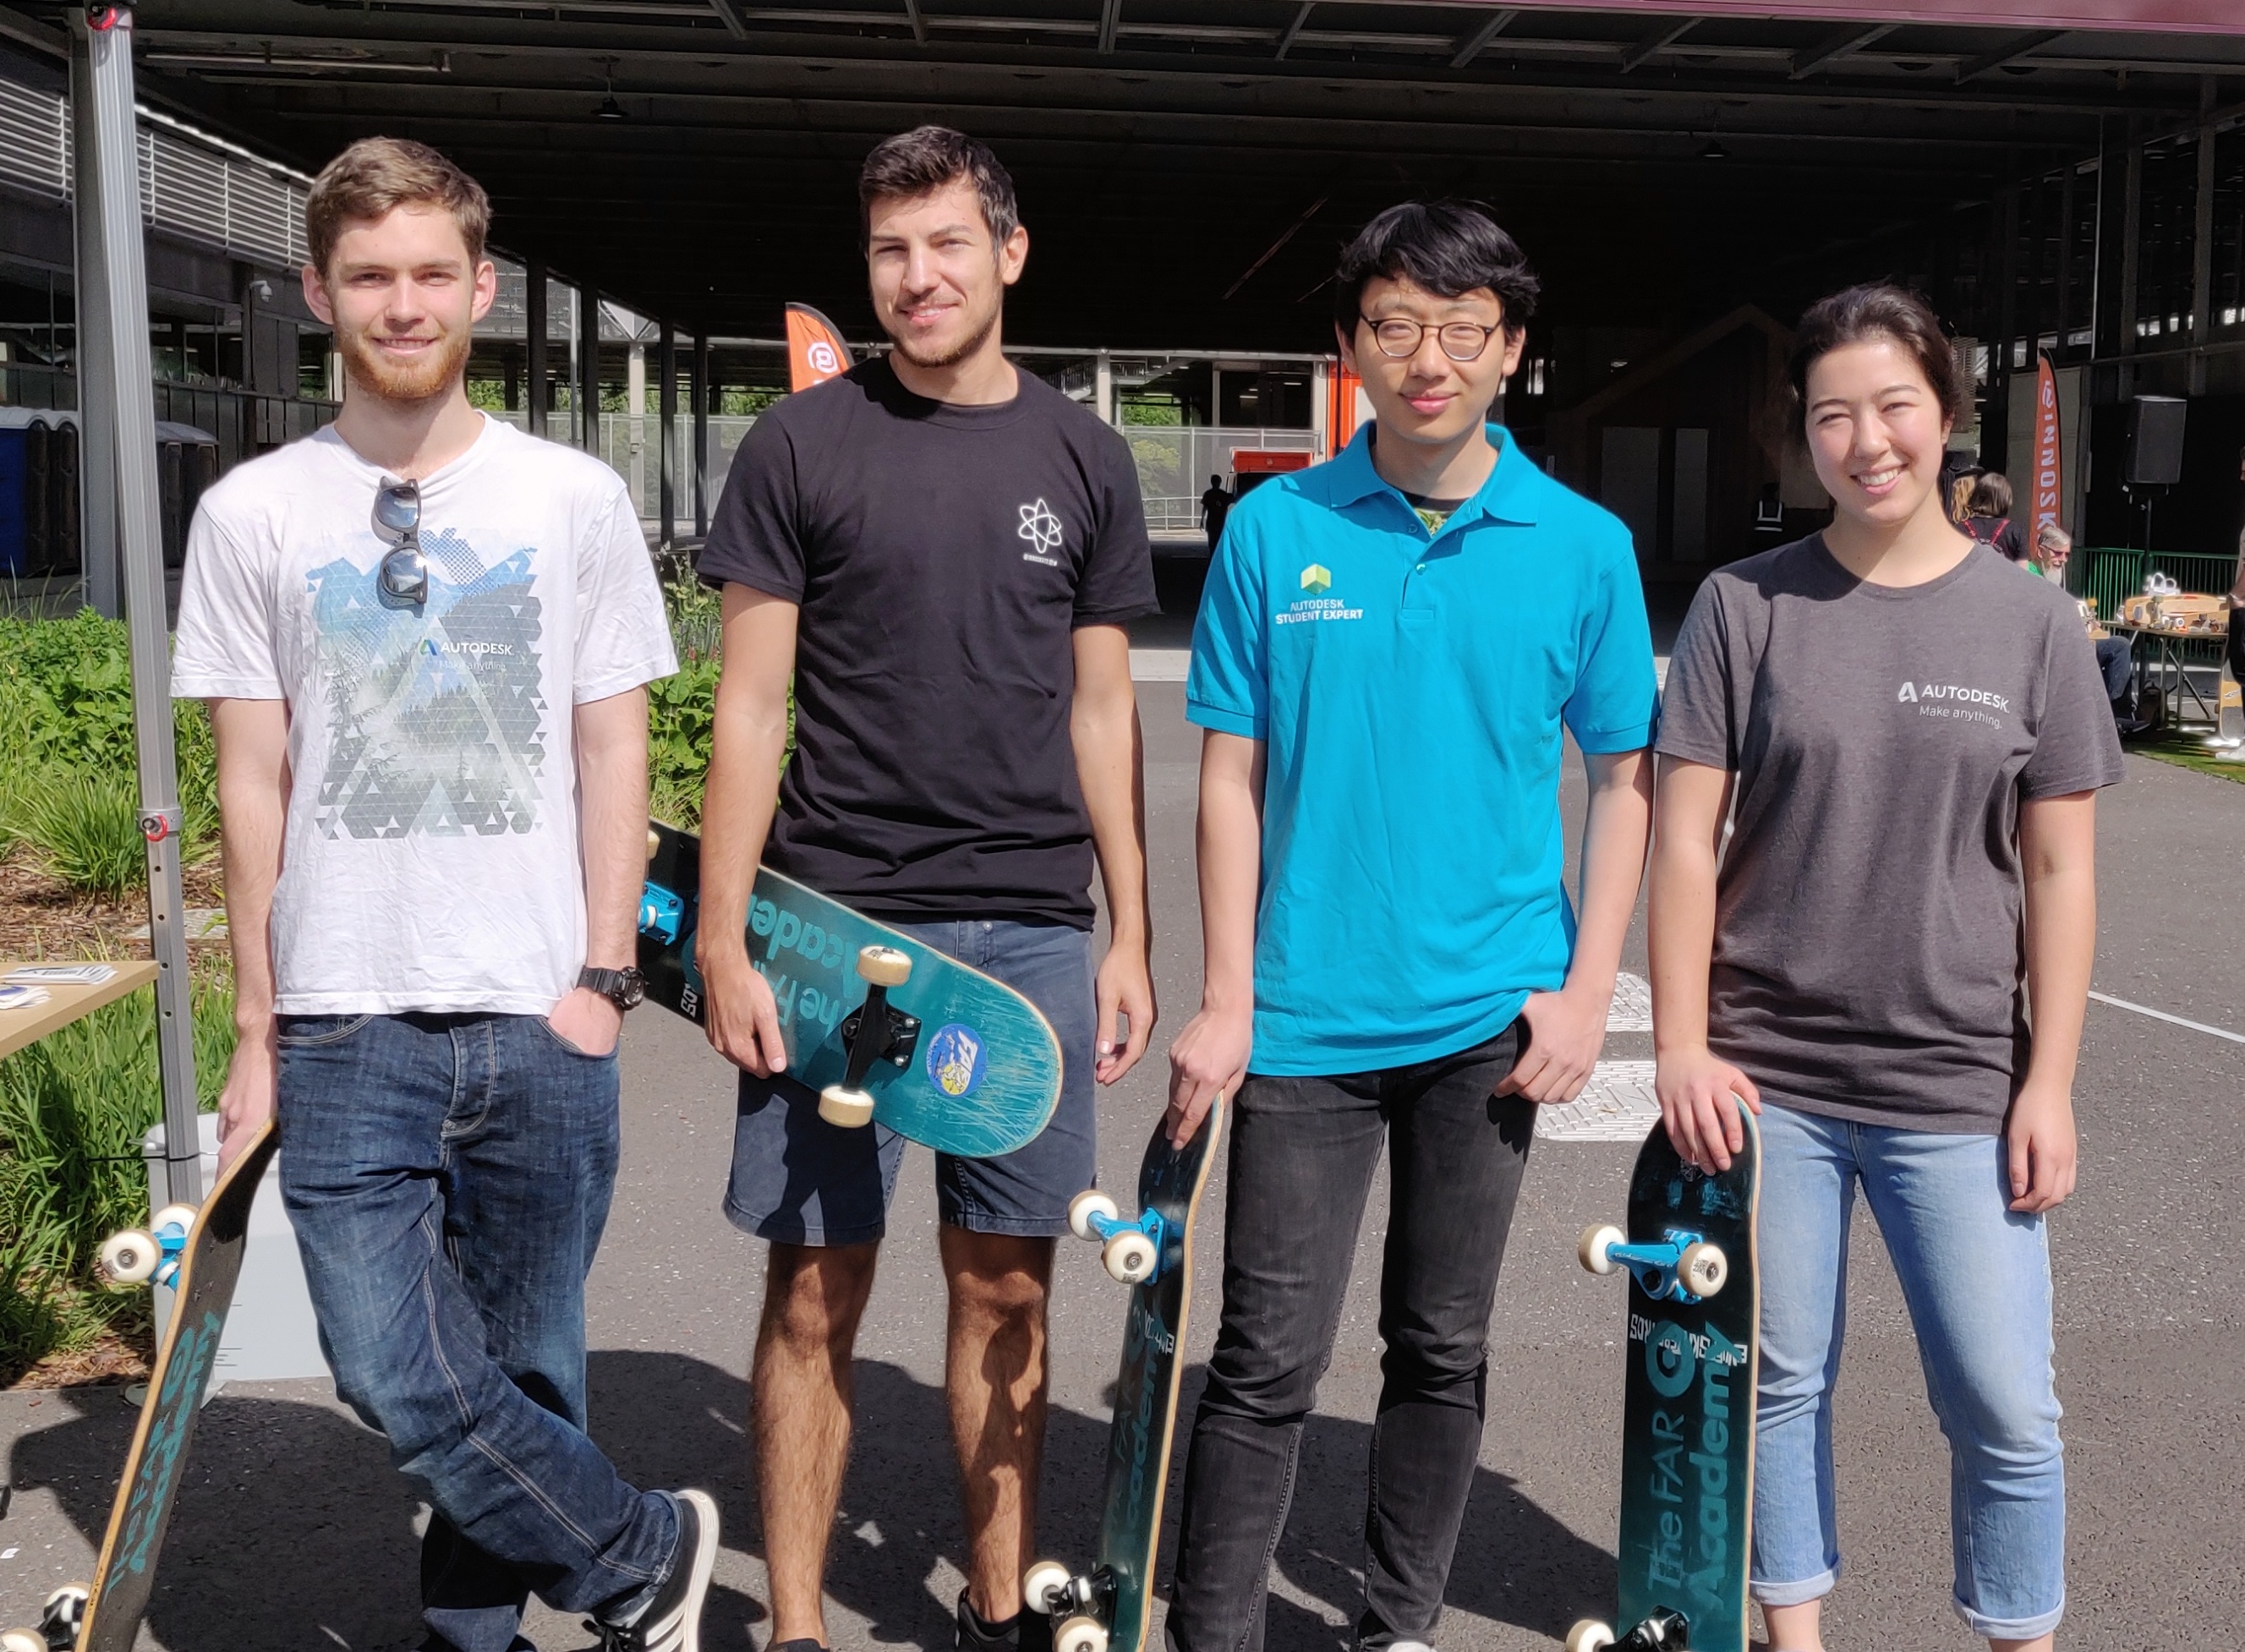 After 50 Years of Innovation, Skateboarding Isn't Just Shredding | Autodesk News